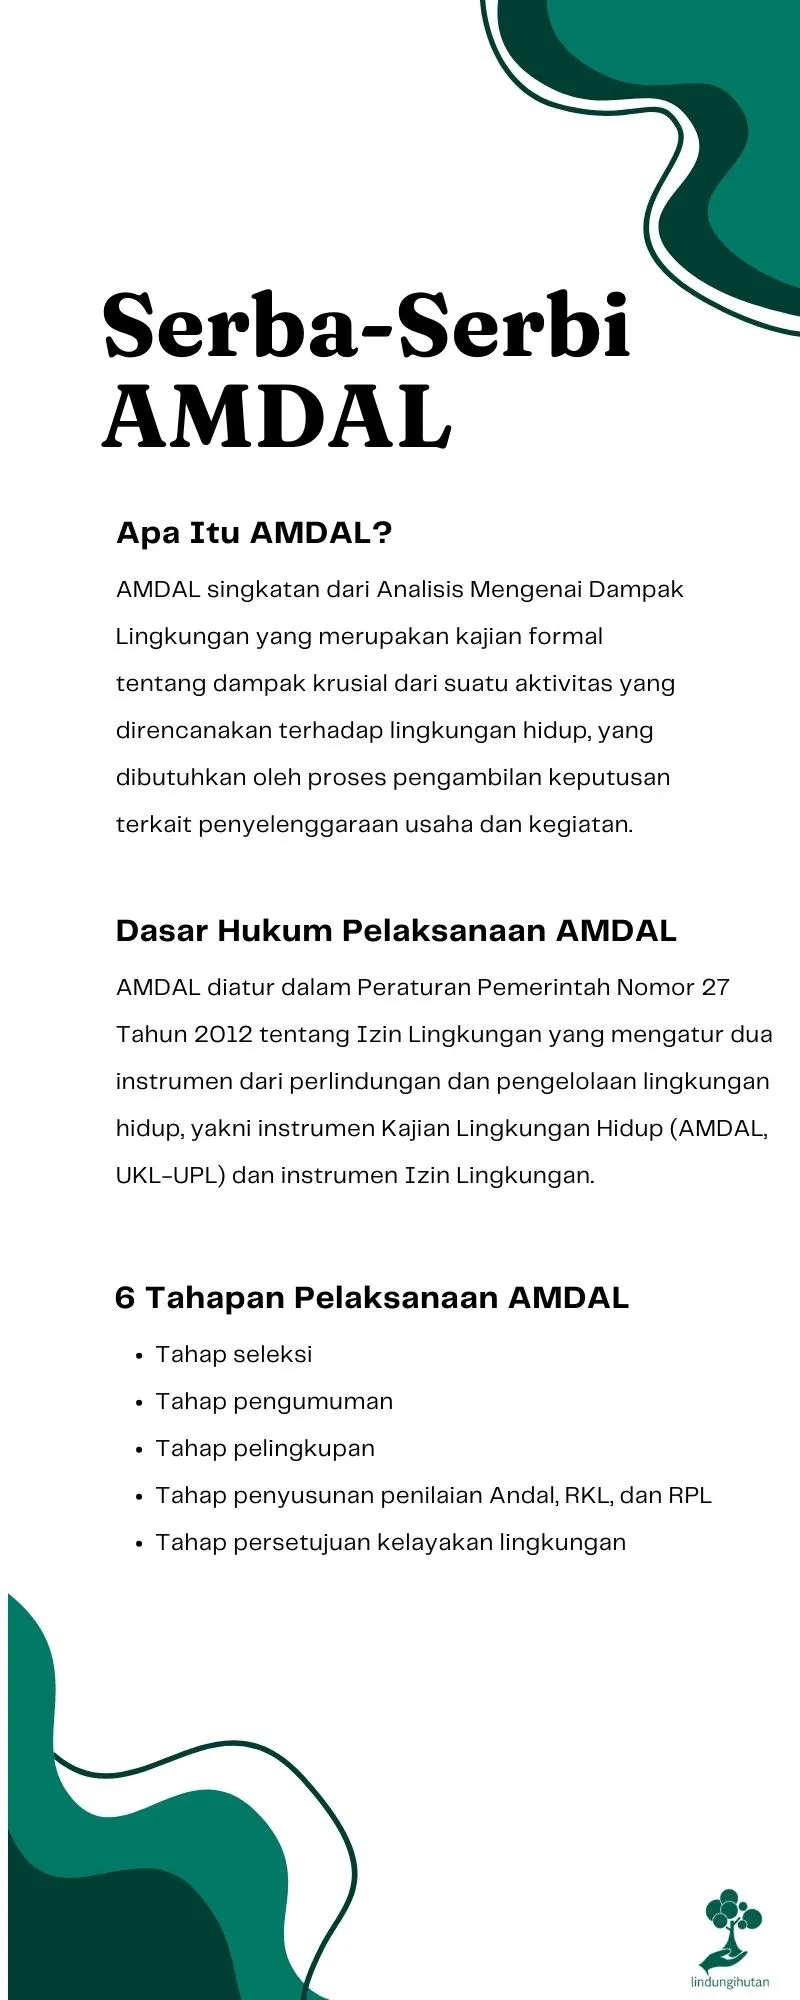 Apa itu AMDAL?